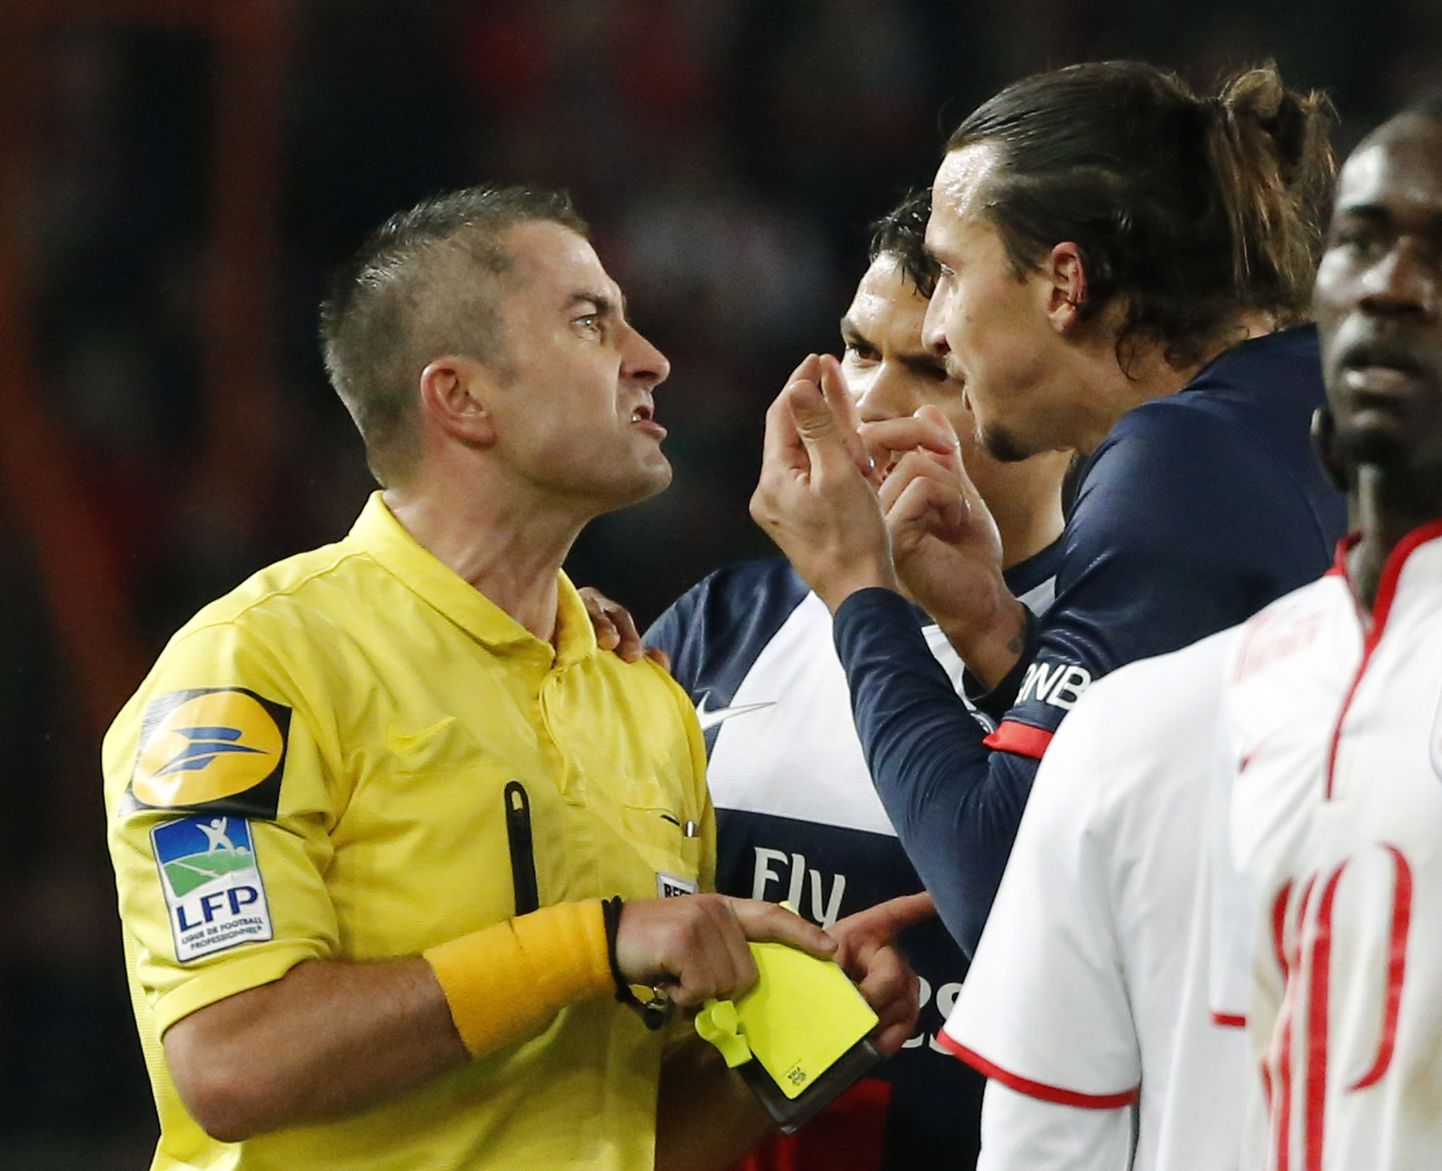 Zlatan Ibrahimovic (keskel) vaidleb kohtuniku Fredy Gautreliga.